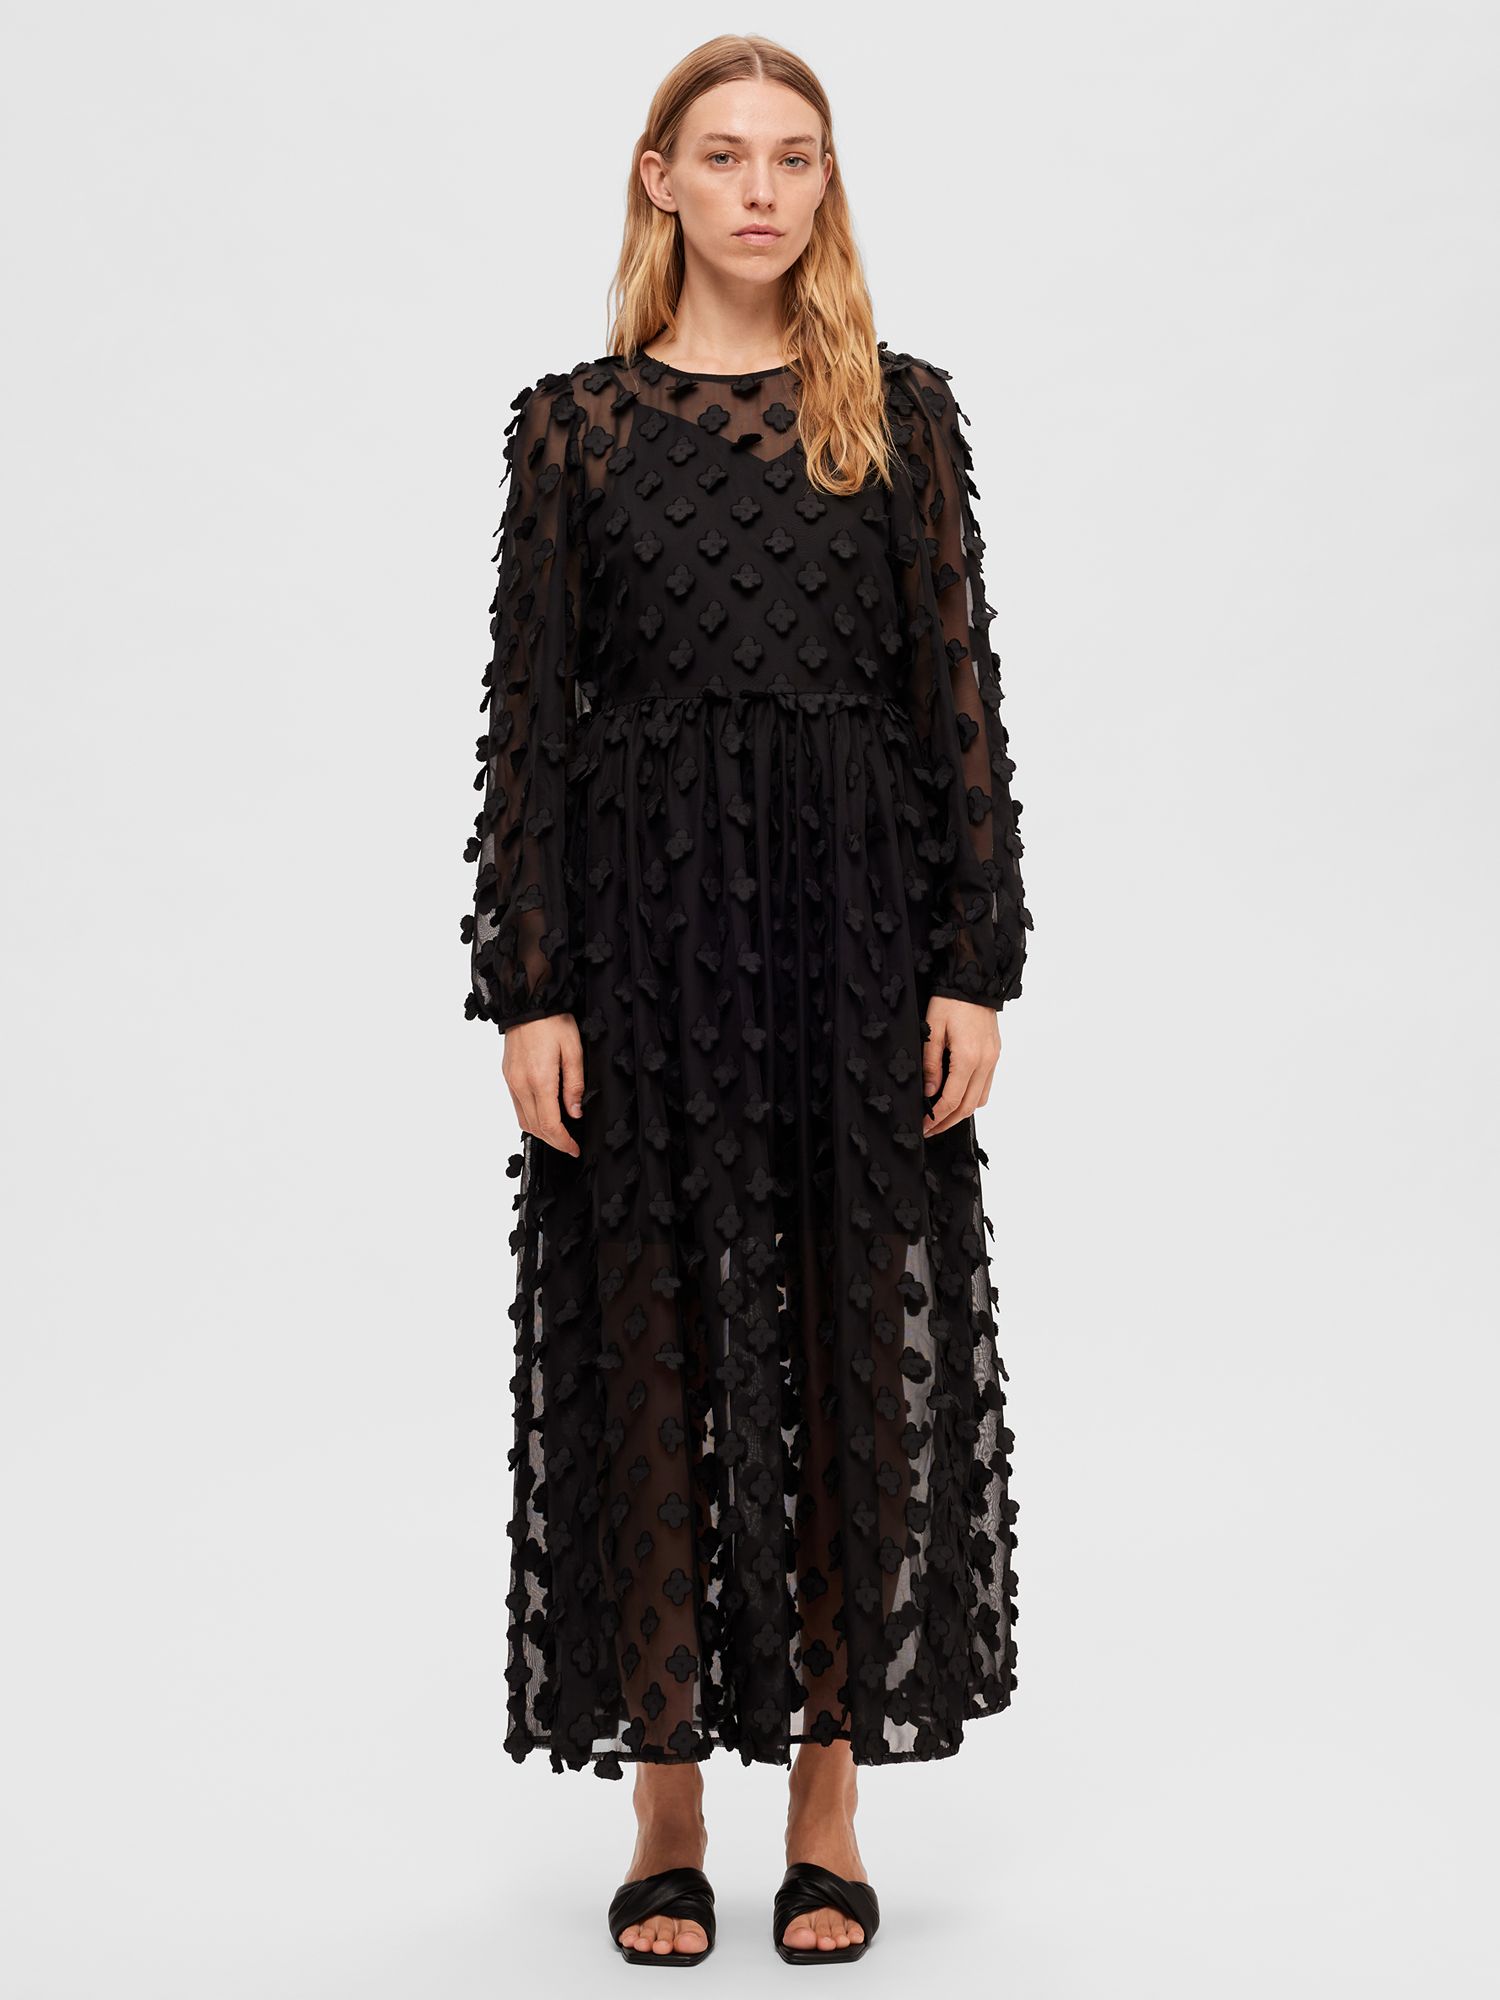 SELECTED FEMME Sheer Textured Maxi Dress, Black at John Lewis & Partners